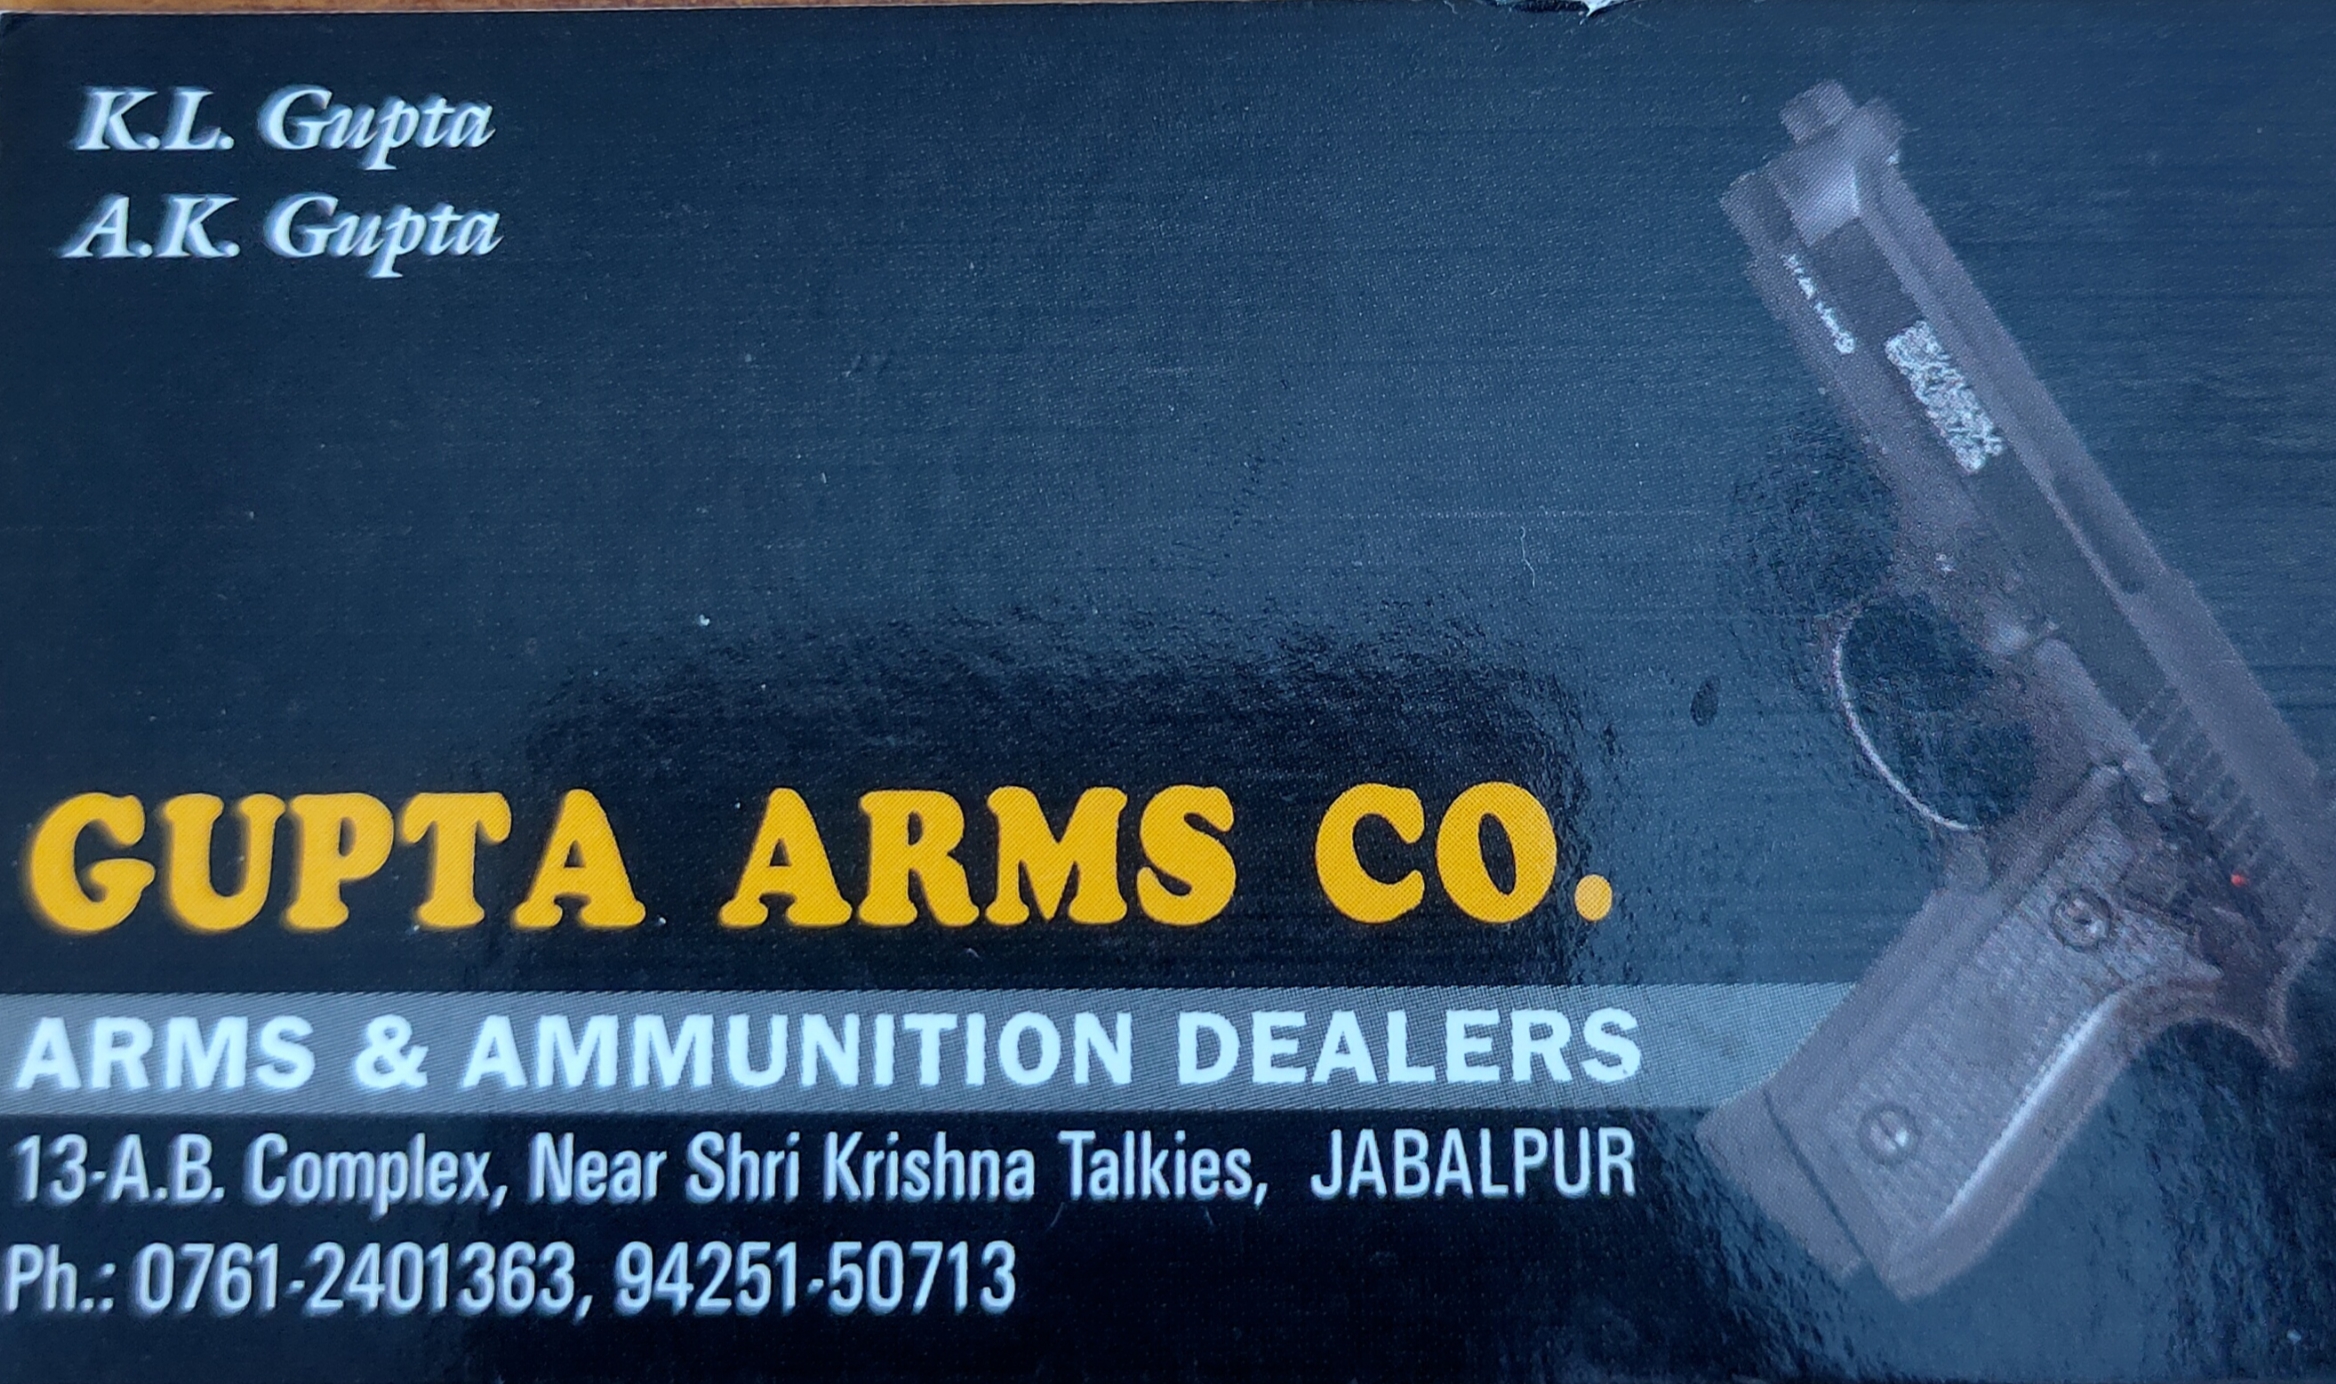 Gupta arms co. Jabalpur